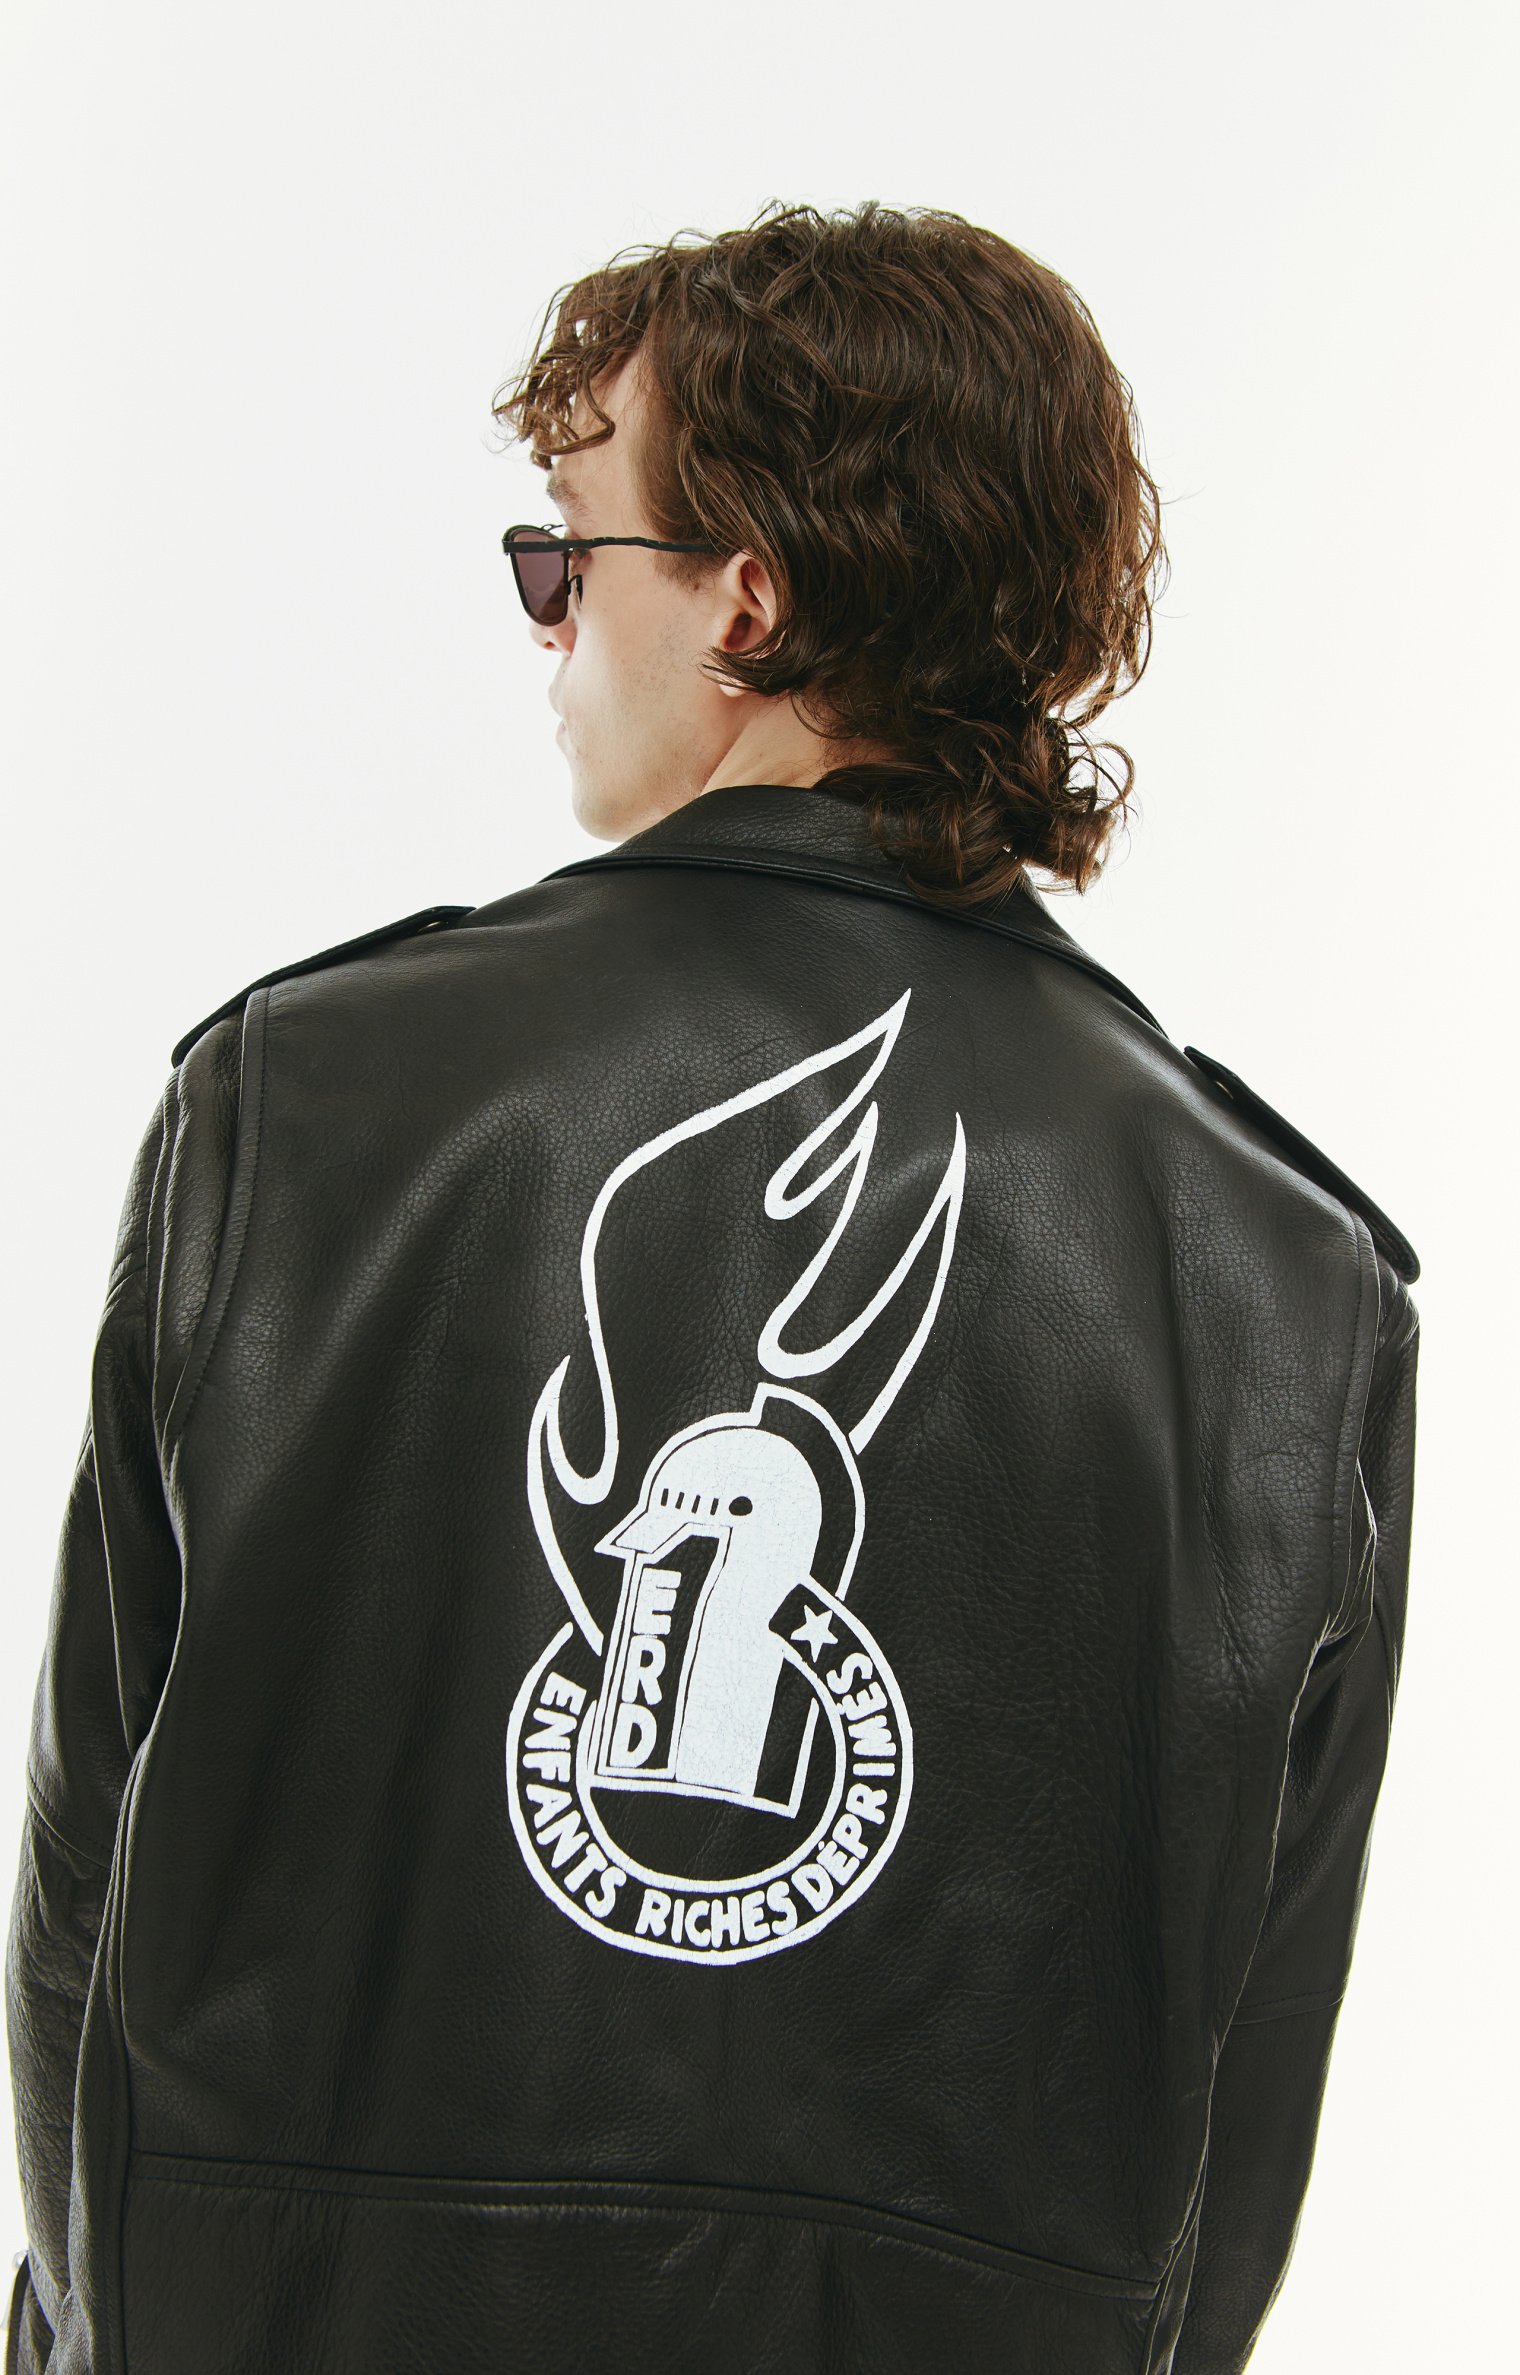 Enfants Riches Deprimes Flame logo moto jacket